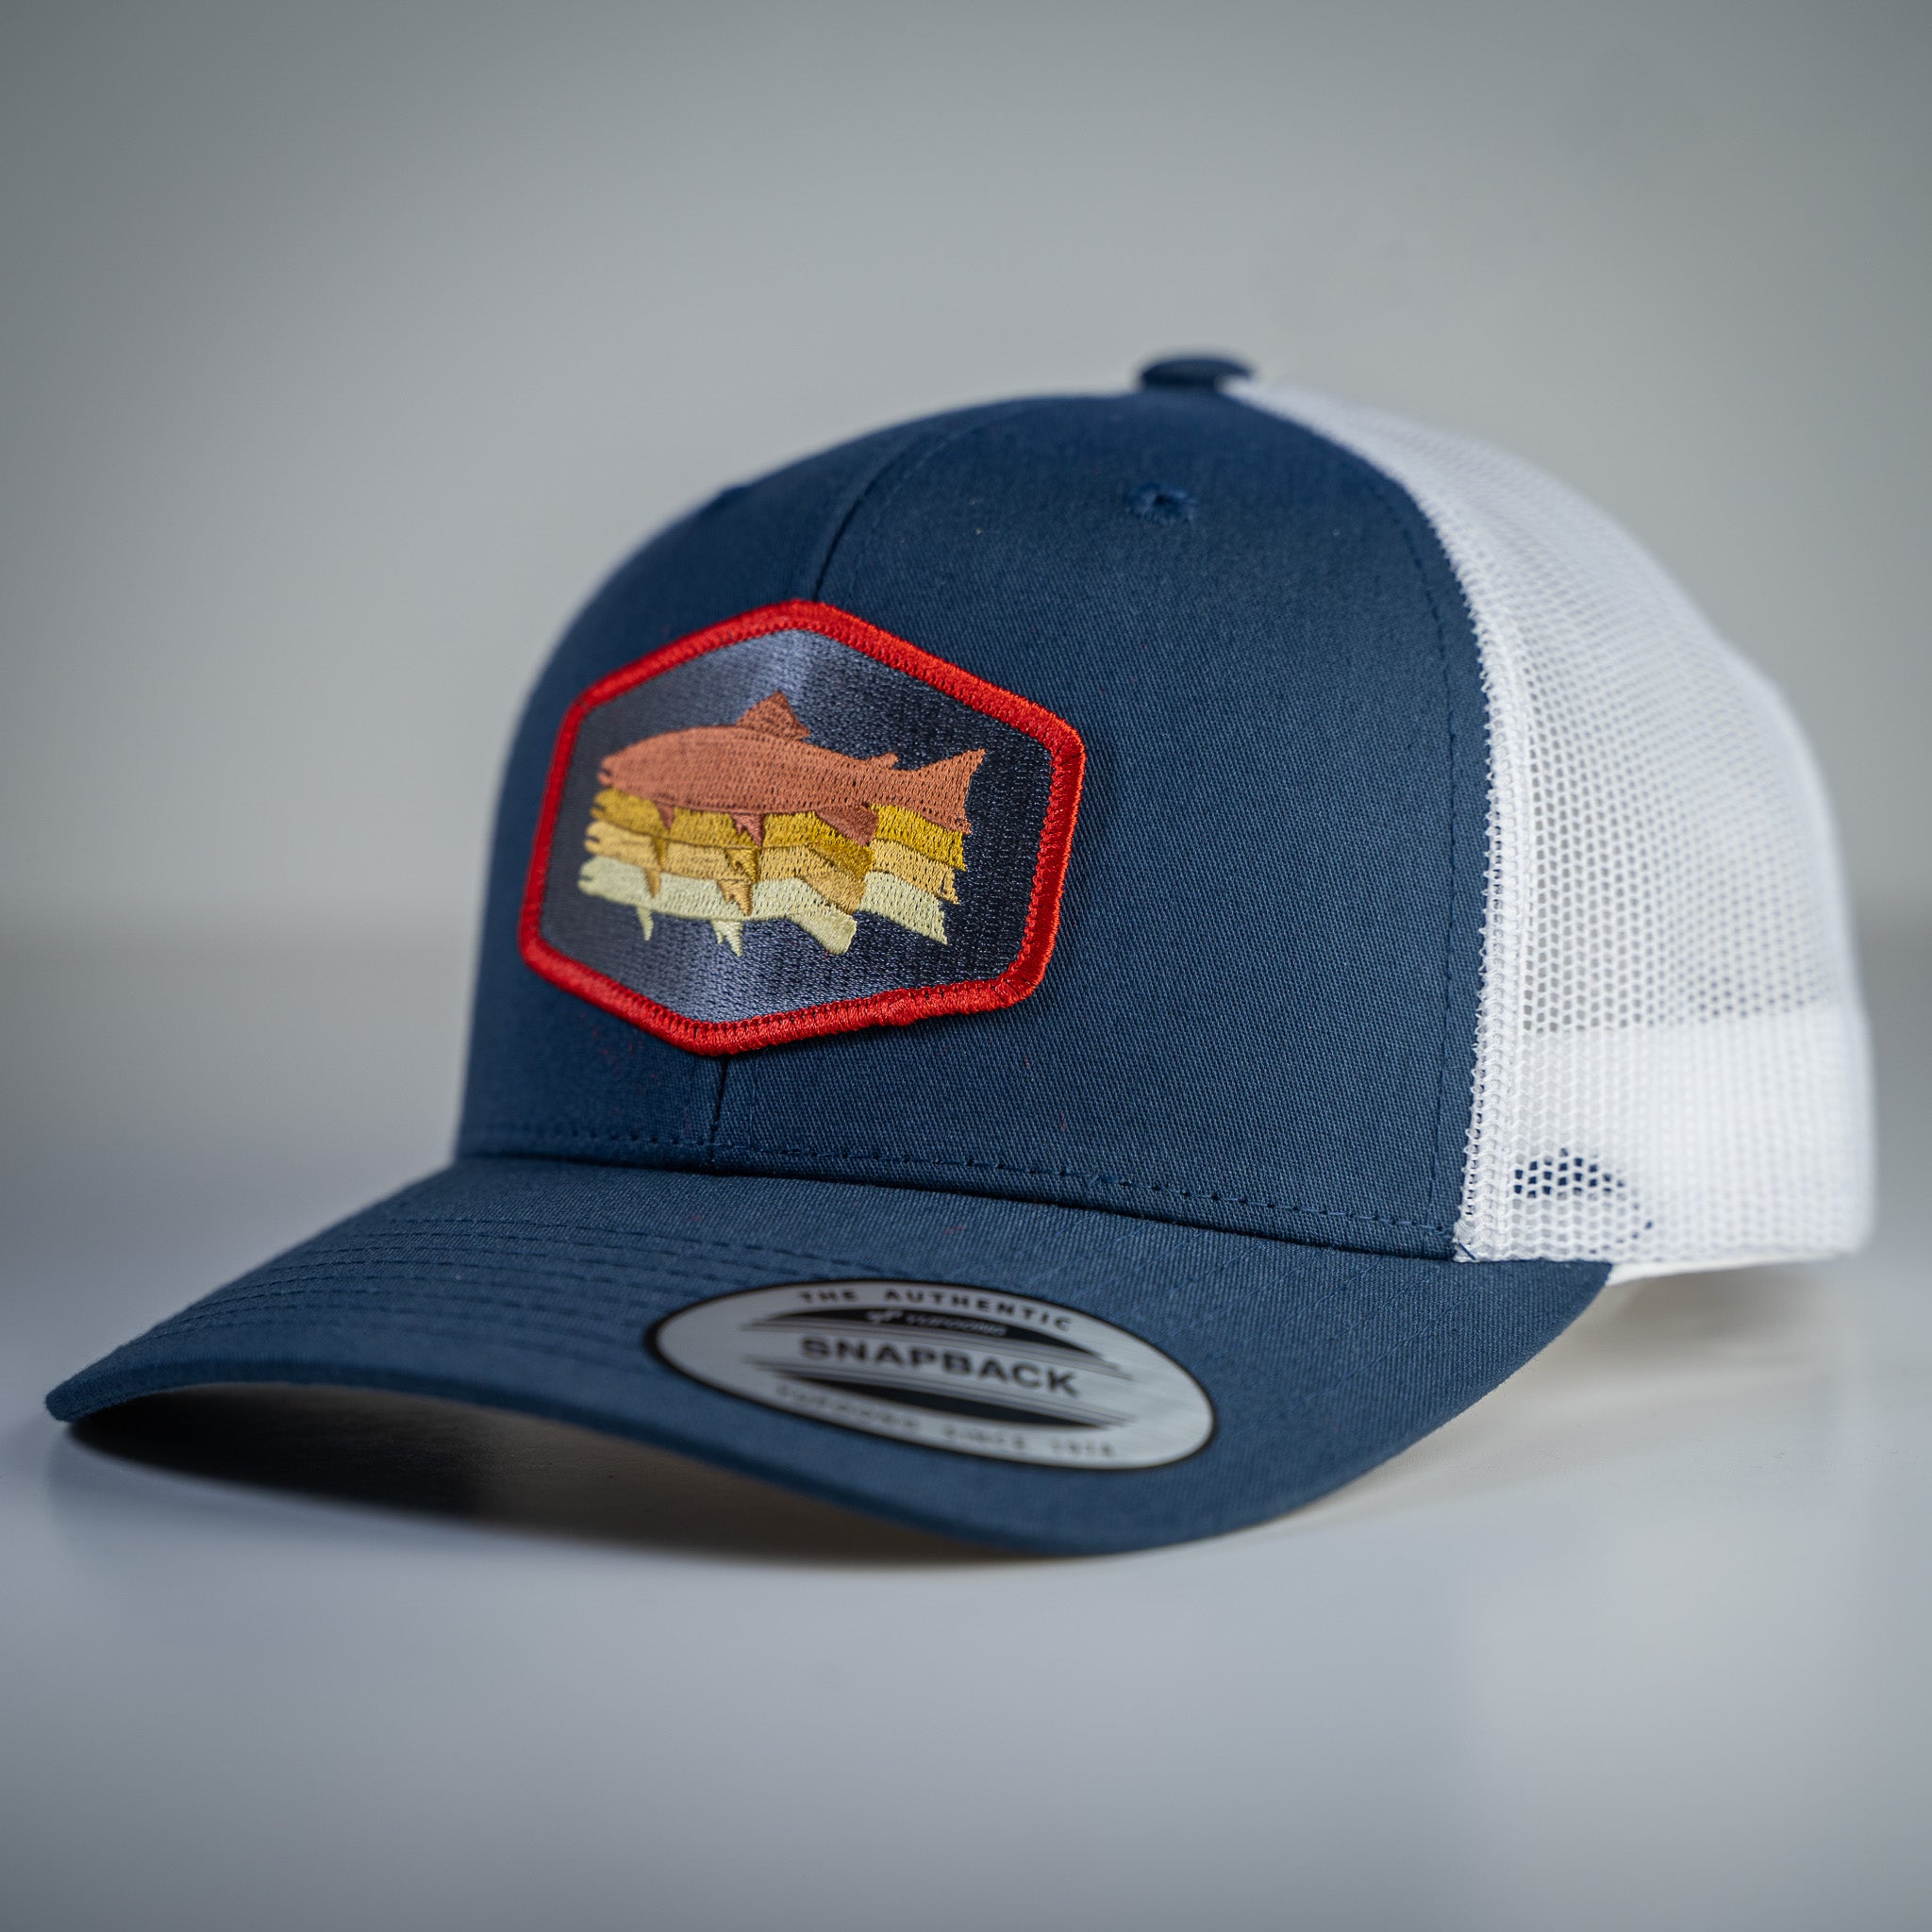 thuizen® Outdoor Hiking Backpacking Fishing Visor Hat (Khaki